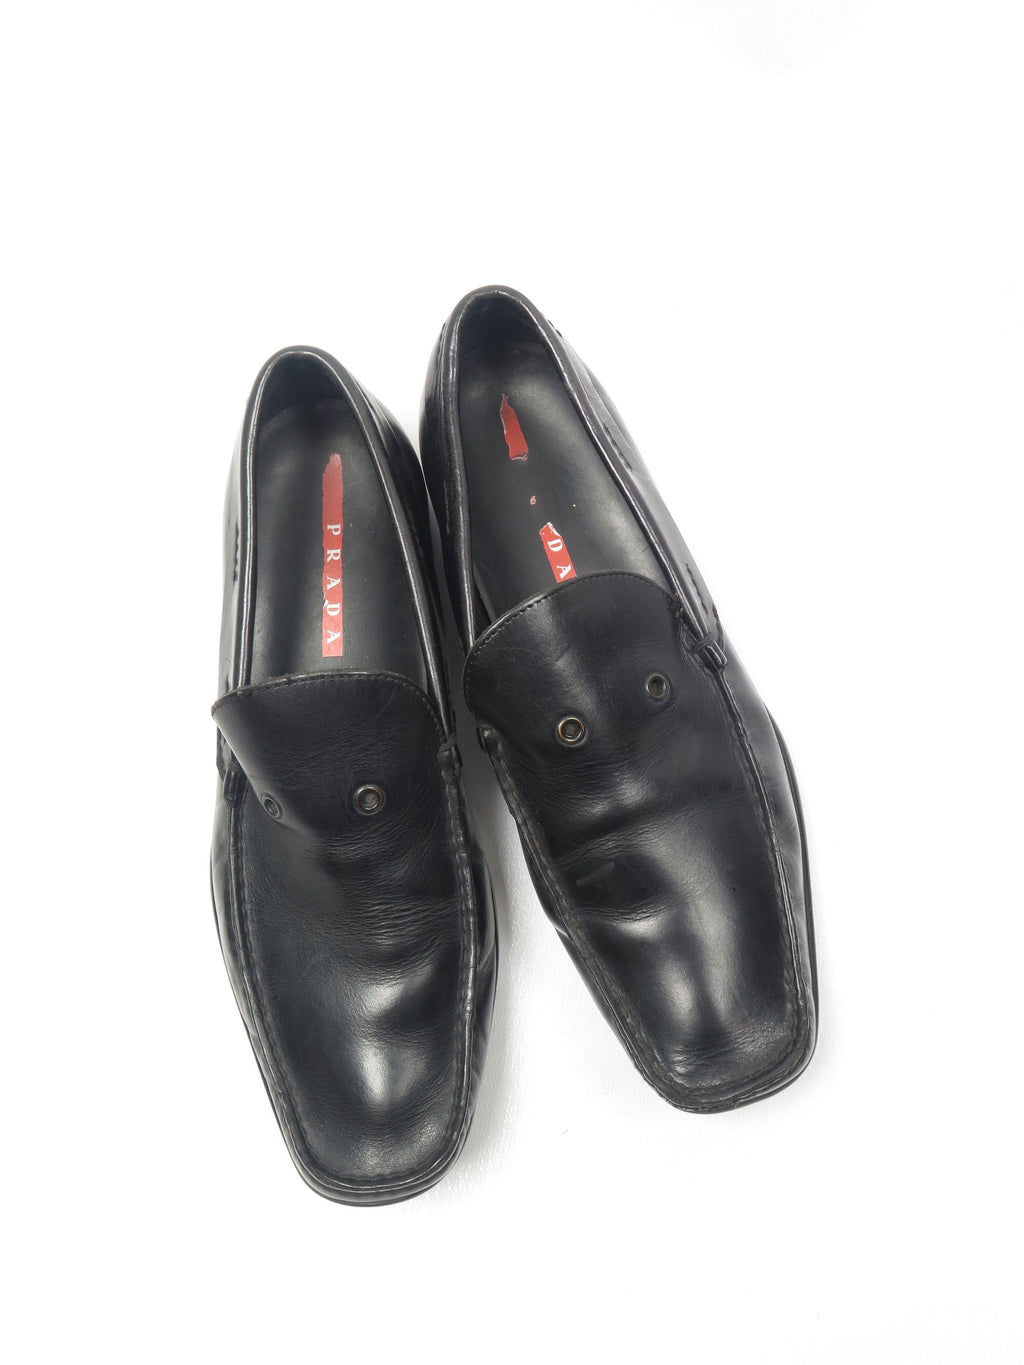 Men’s Leather Prada Loafers 9 UK 42 Eu - The Harlequin